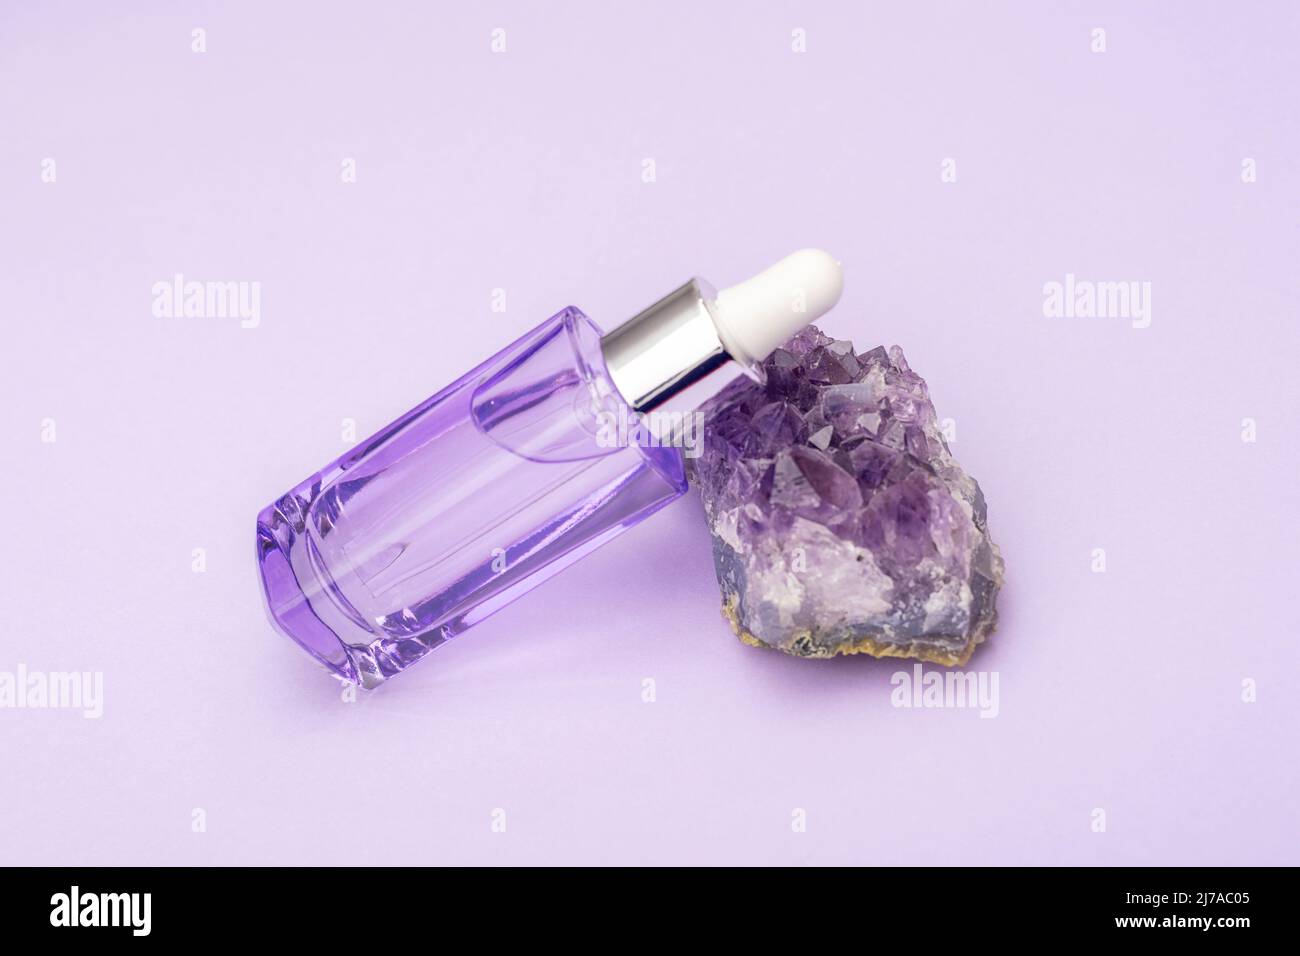 Purple cosmetic serum bottle on amethyst crystal stone, close up. Stock Photo